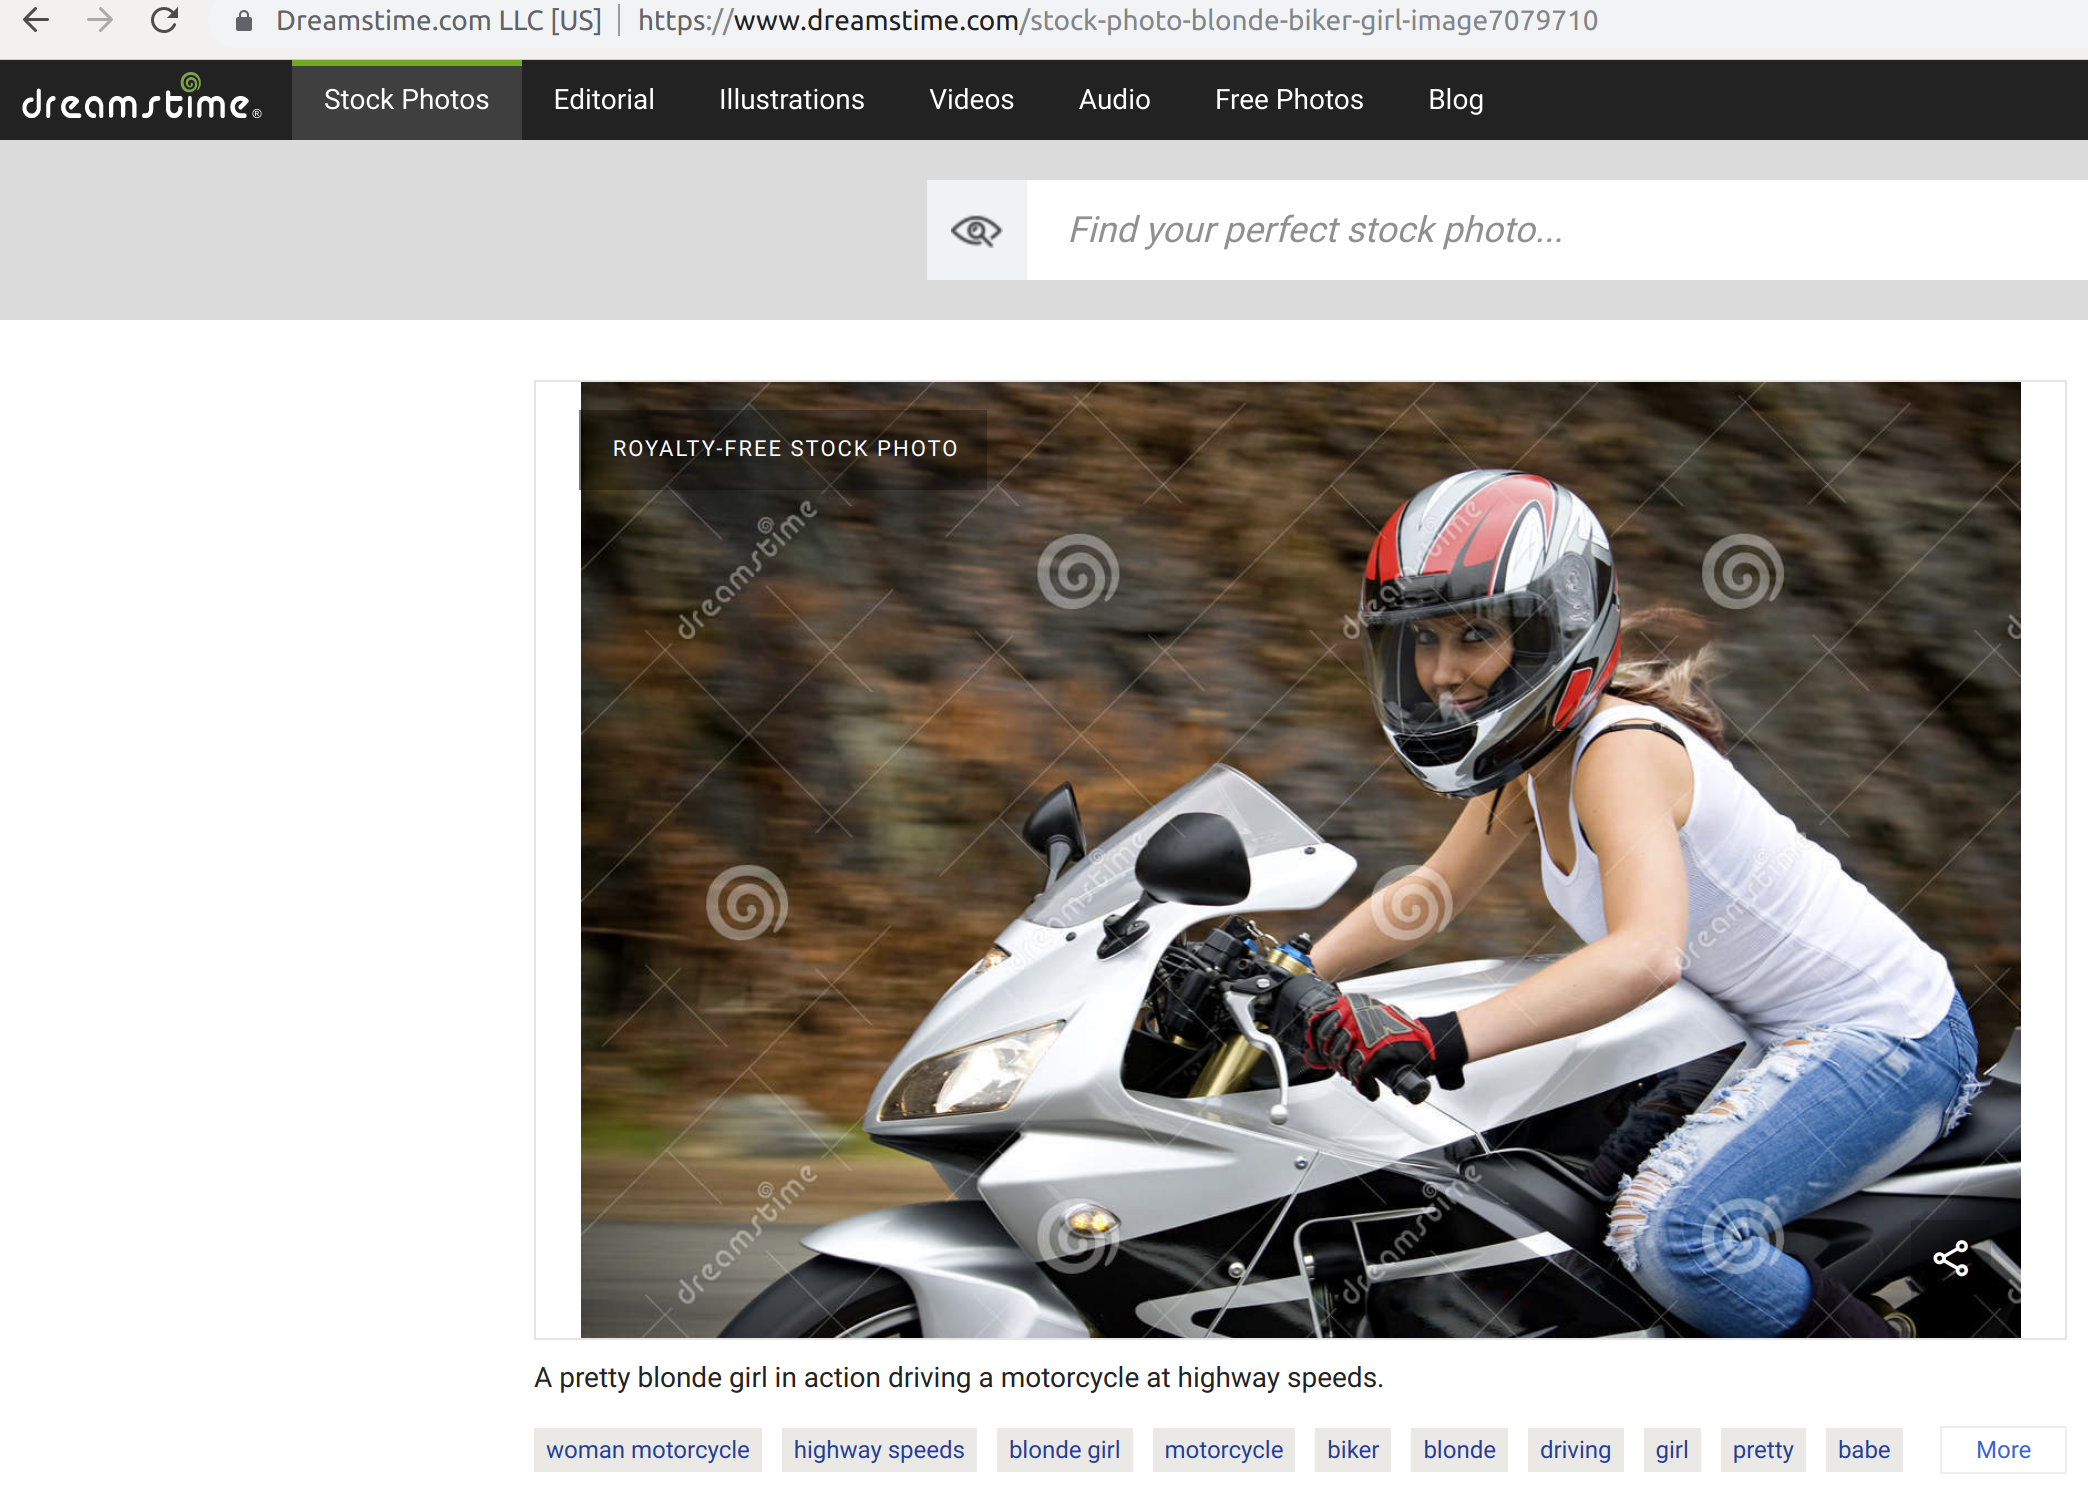 Stock photo - woman on motorcycle